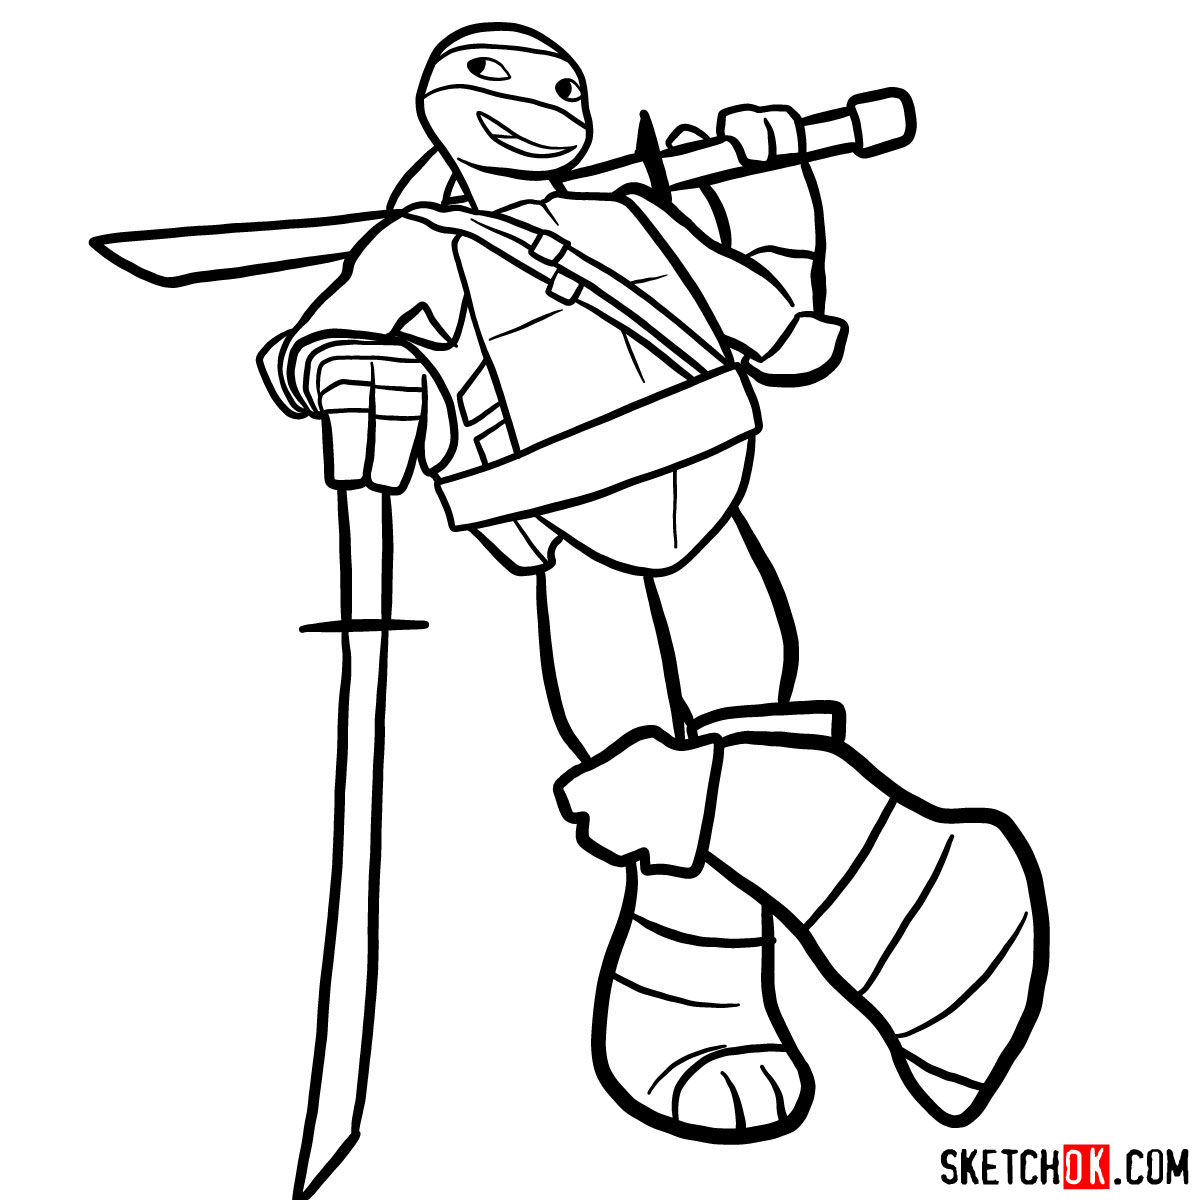 How to draw Leonardo ninja turtle cartoon style